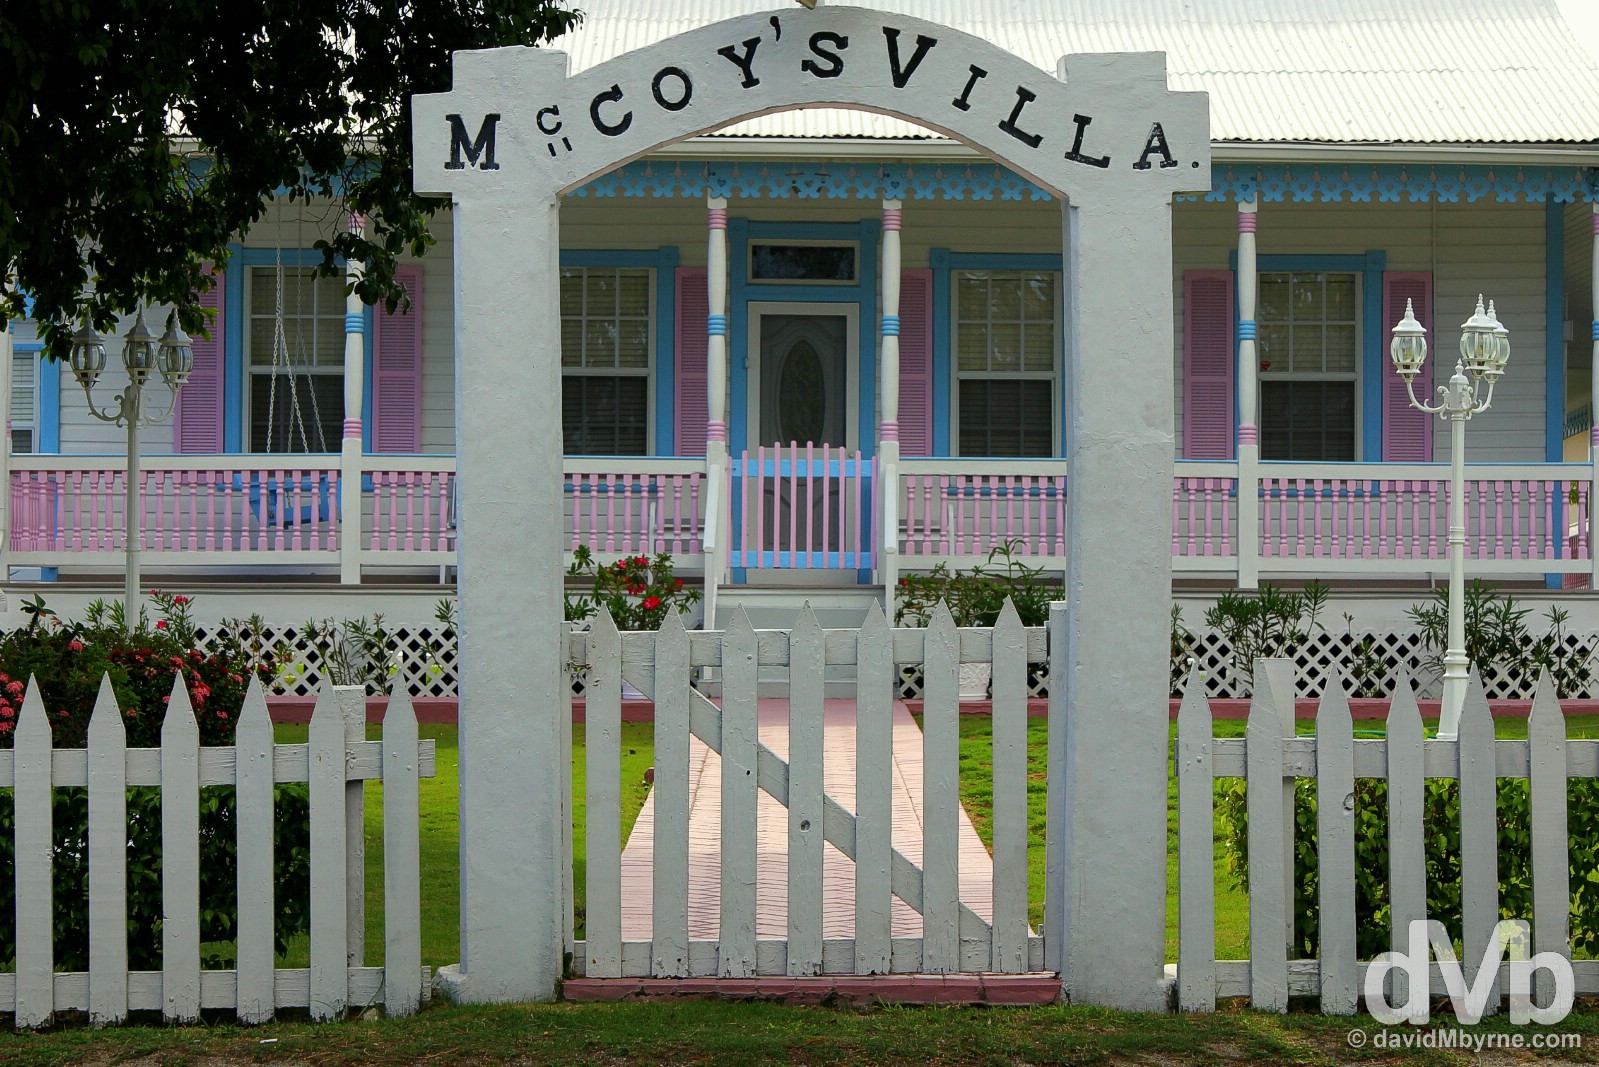 McCoy's Villa, Grand Cayman, Cayman Islands, Greater Antilles. May 12, 2015. 